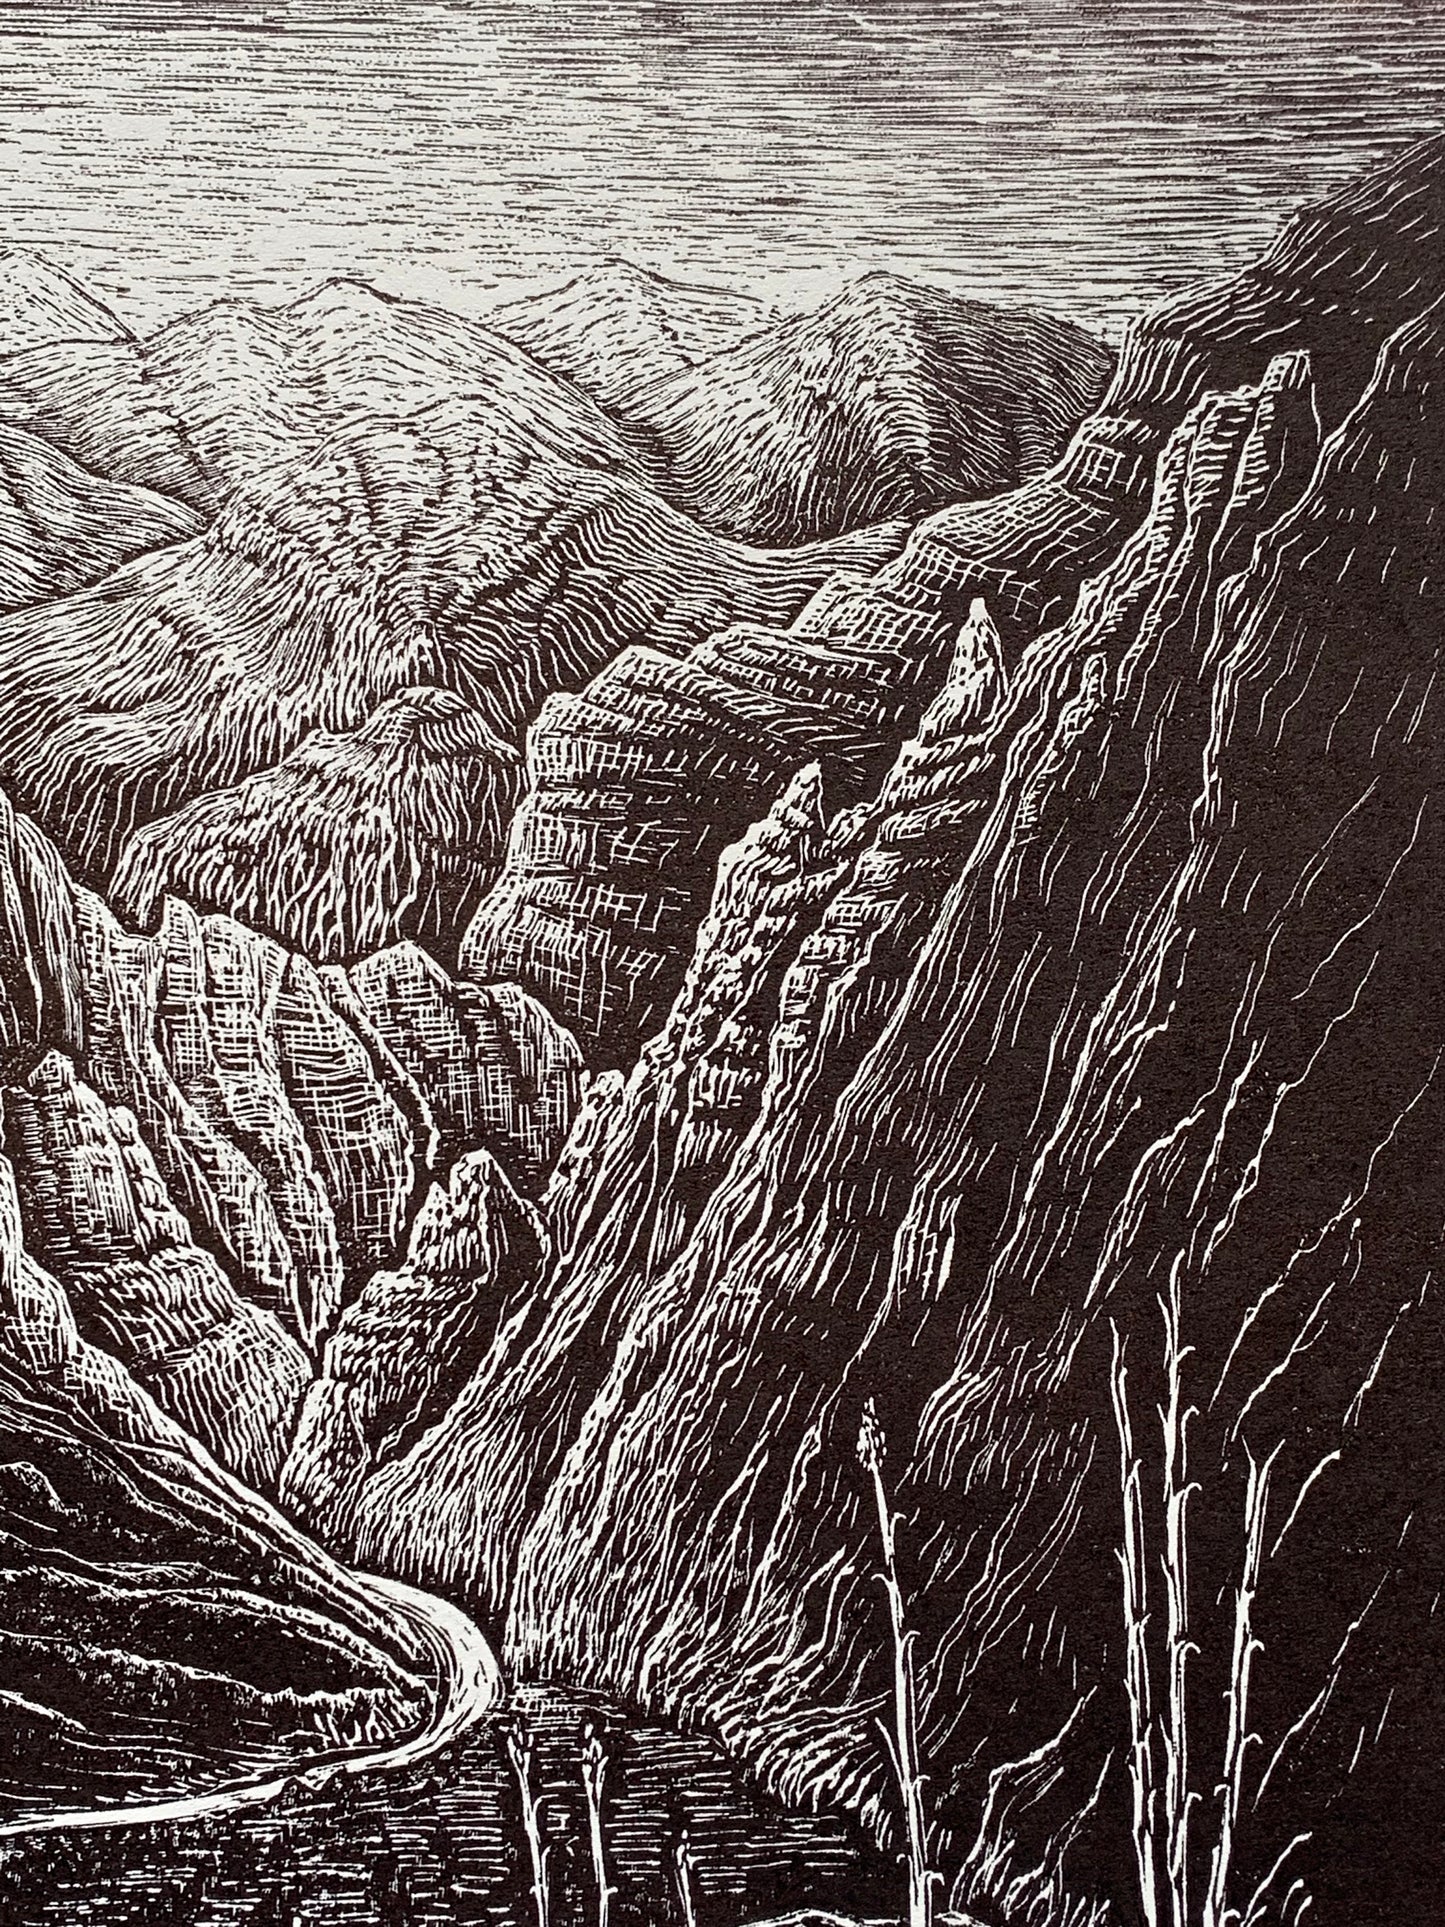 Set 2 Inspirational Wood Engravings Southwest Views Mojave Desert and Colorado River Canyon